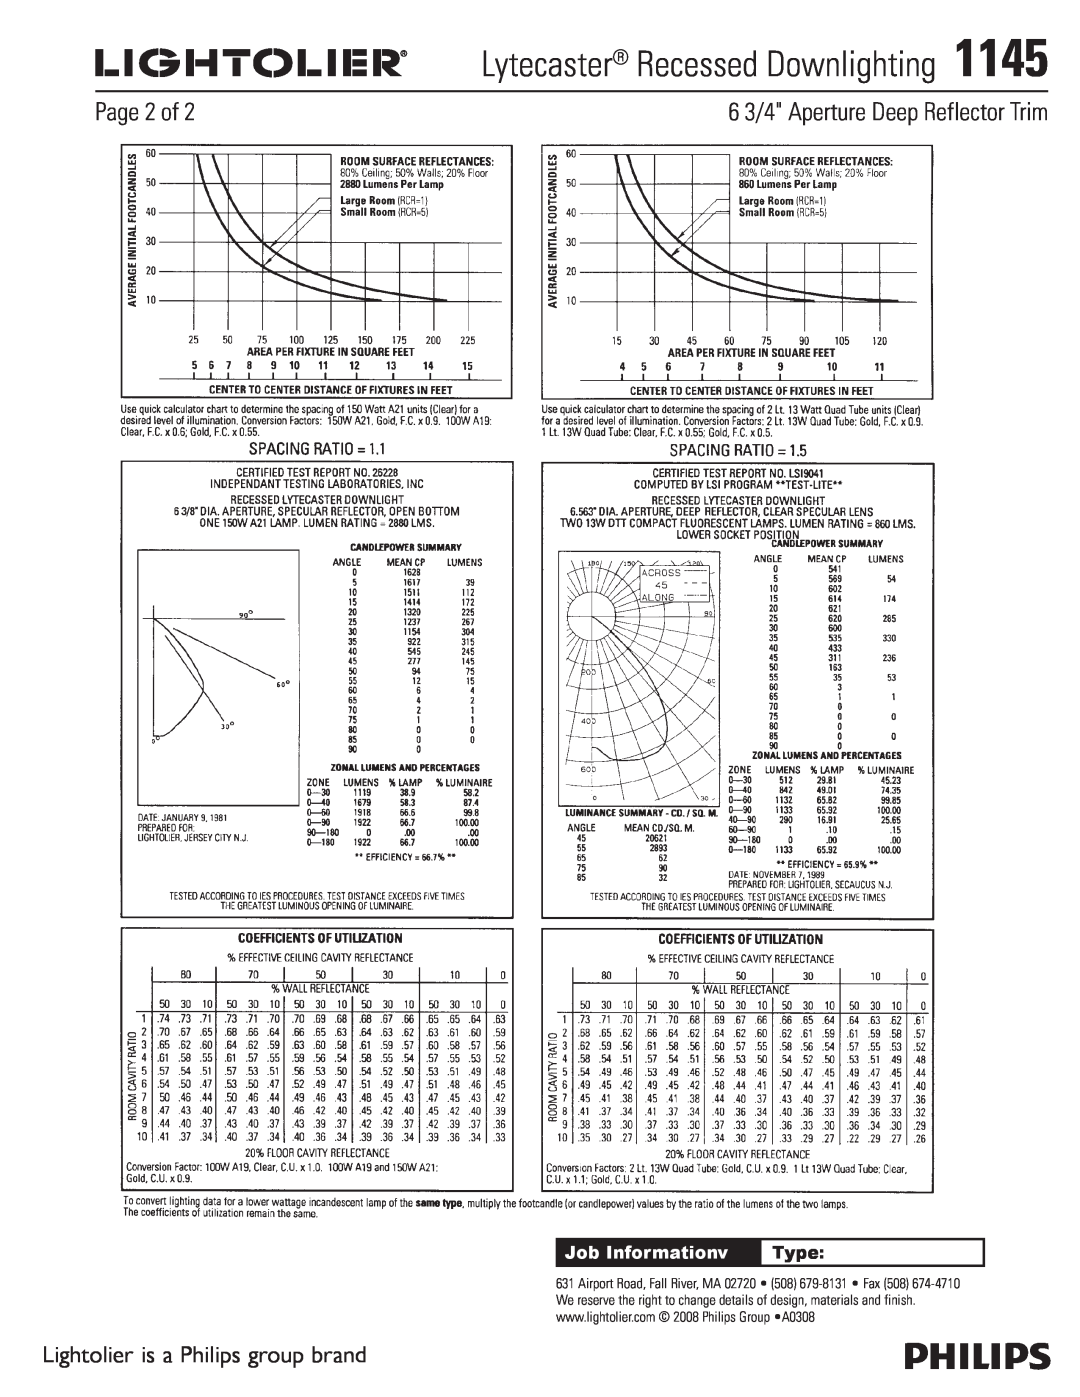 Lightolier 1145 Page 2 of, Job Informationv, Lytecaster Recessed Downlighting, 6 3/4 Aperture Deep Reflector Trim, Type 